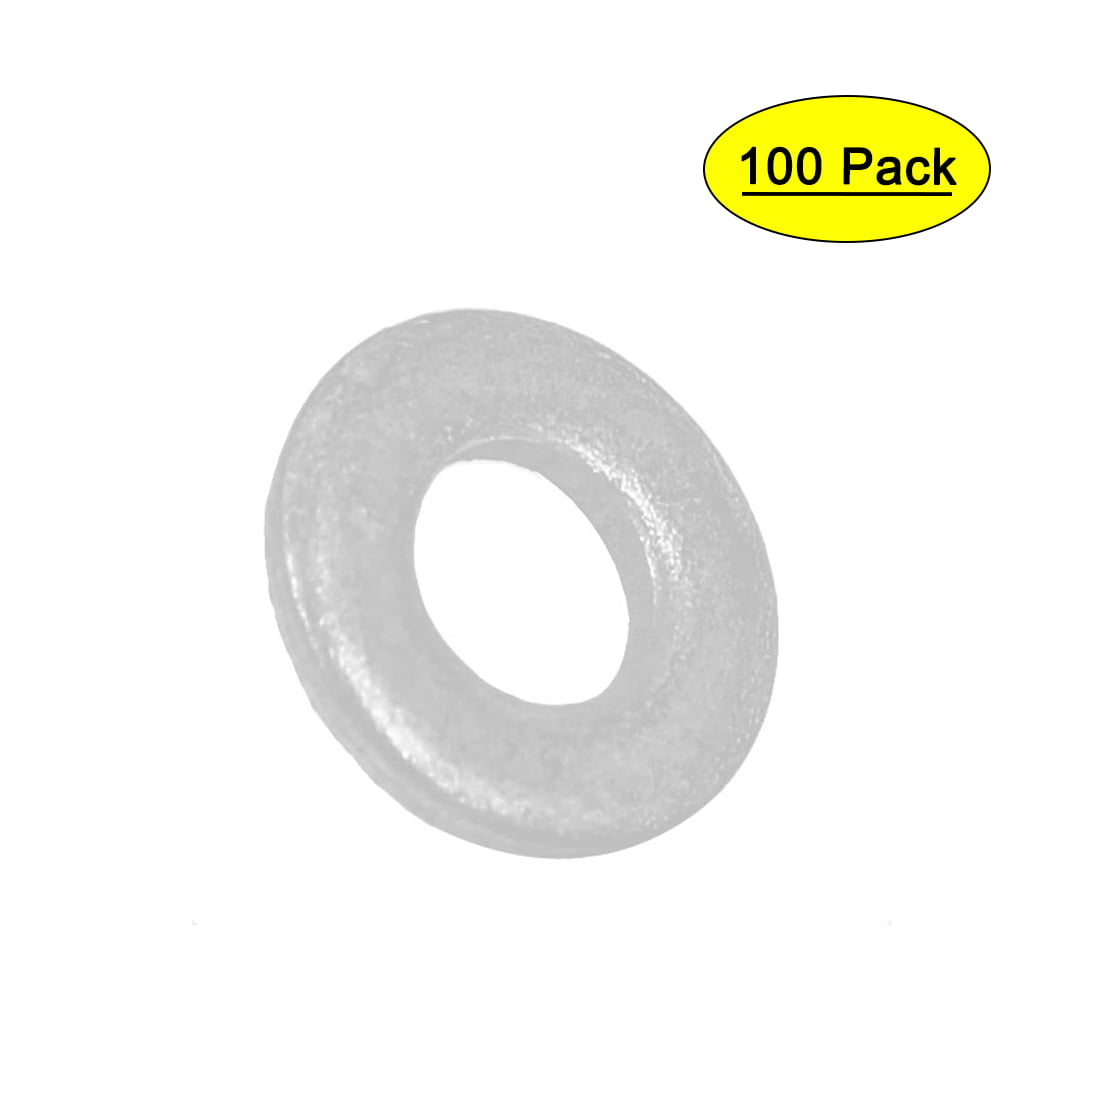 2.5mm x 5mm Zinc Plated Flat Pads Washers Gaskets Fasteners GB97 100PCS 